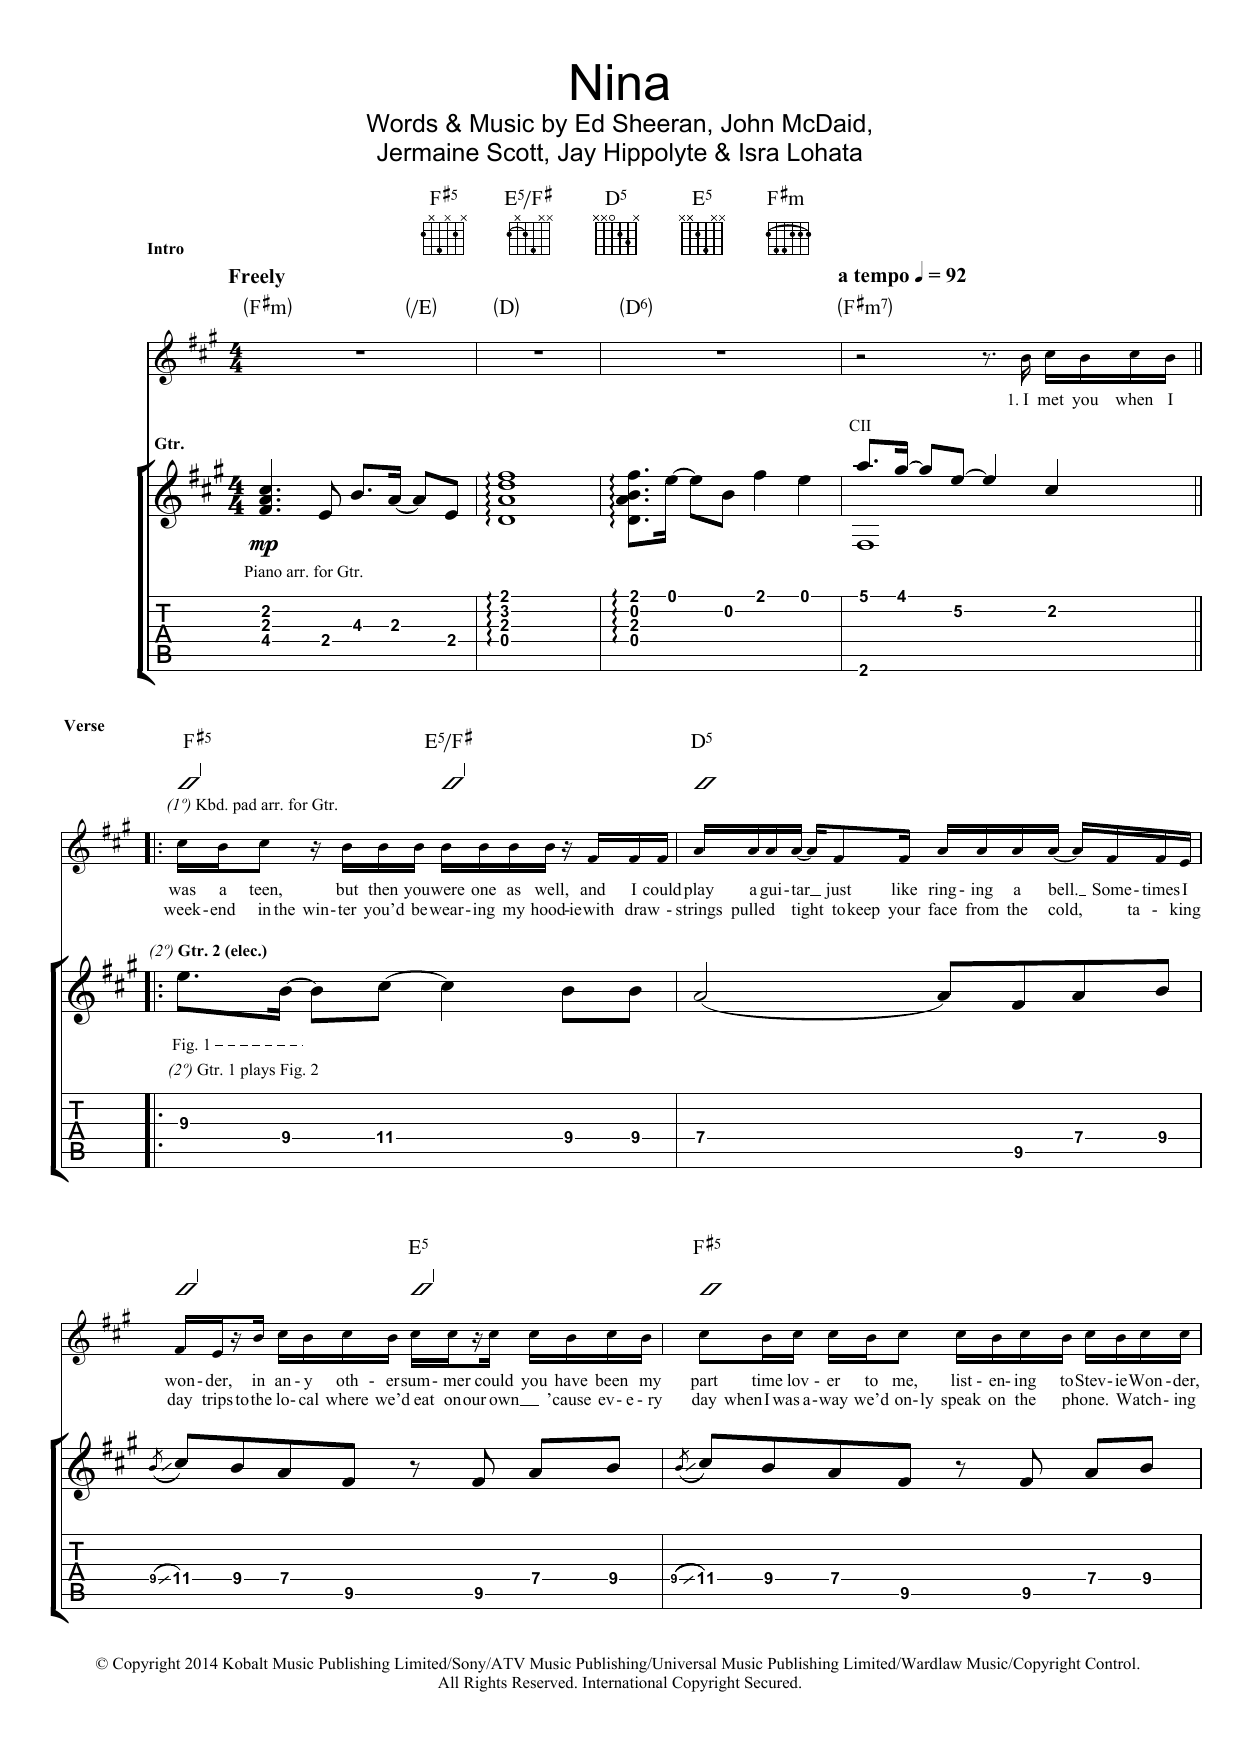 Download Ed Sheeran Nina Sheet Music and learn how to play Guitar Tab PDF digital score in minutes